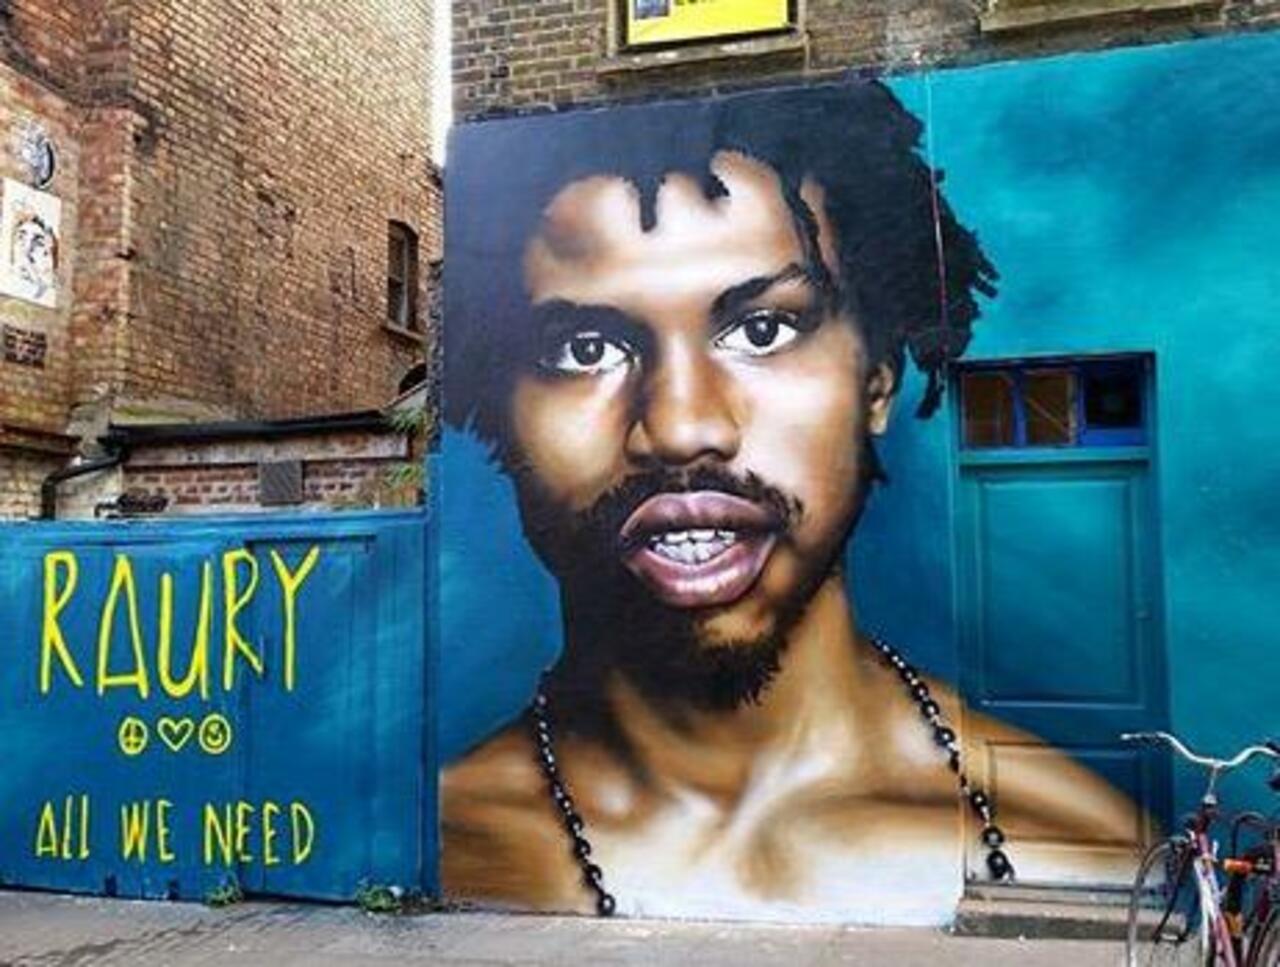 New Street Art of Raury by Olliver Switch in Brick Lane 

#art #graffiti #mural #streetart http://t.co/zdJ2FKO6Nx